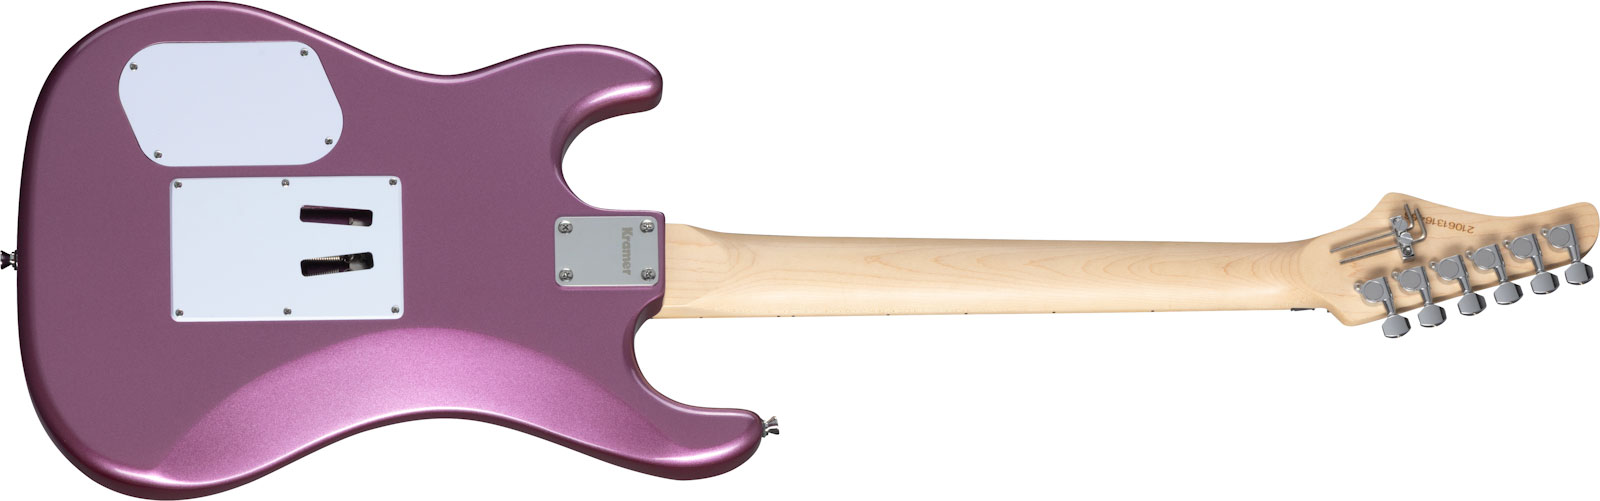 Kramer Pacer Classic 2h Fr Mn - Purple Passion Metallic - Str shape electric guitar - Variation 1